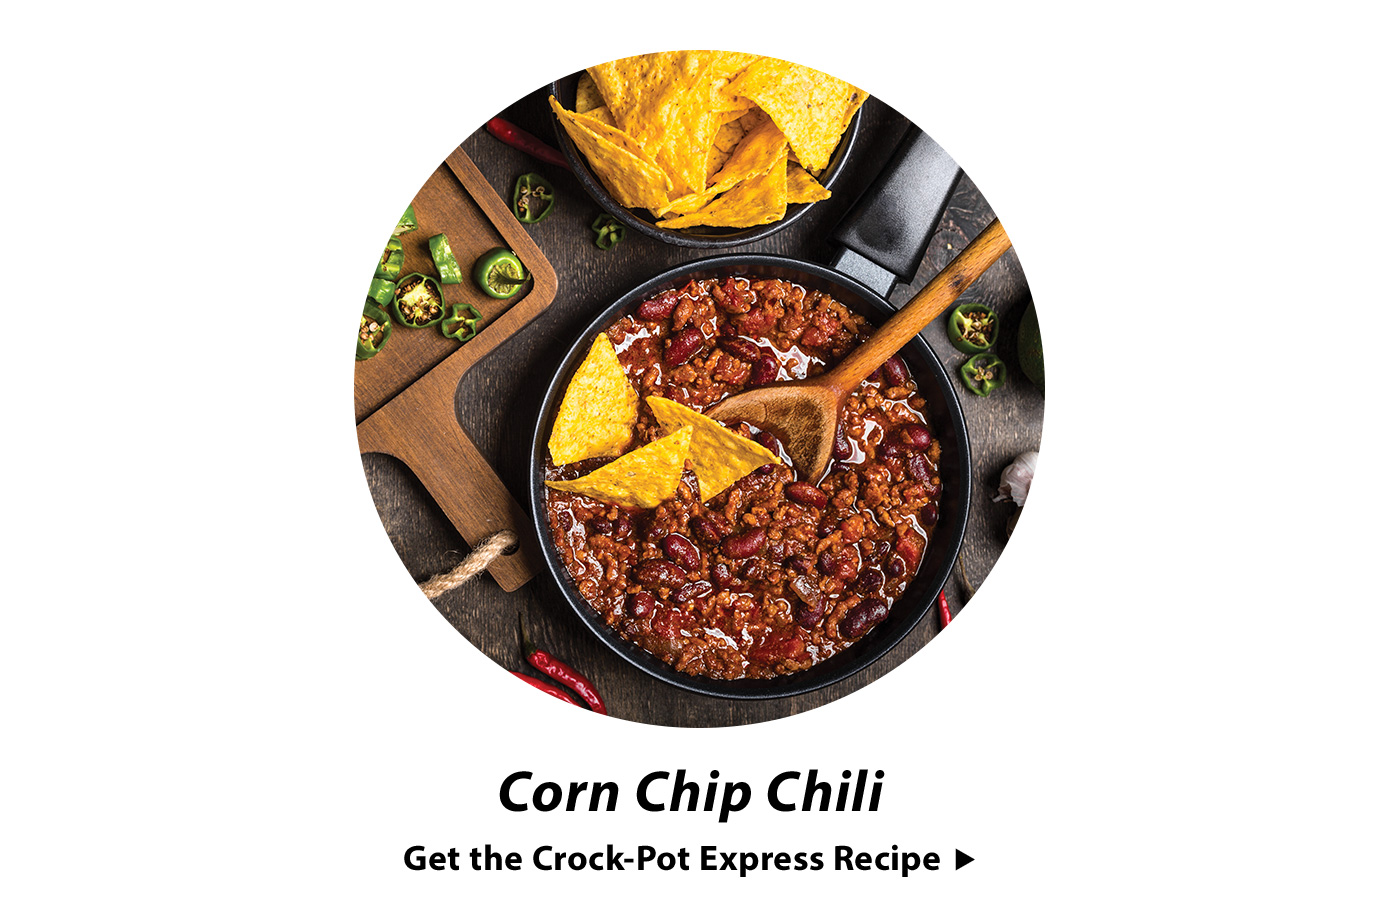 Corn Chip Chili. Get the Crock-Pot Express Recipe